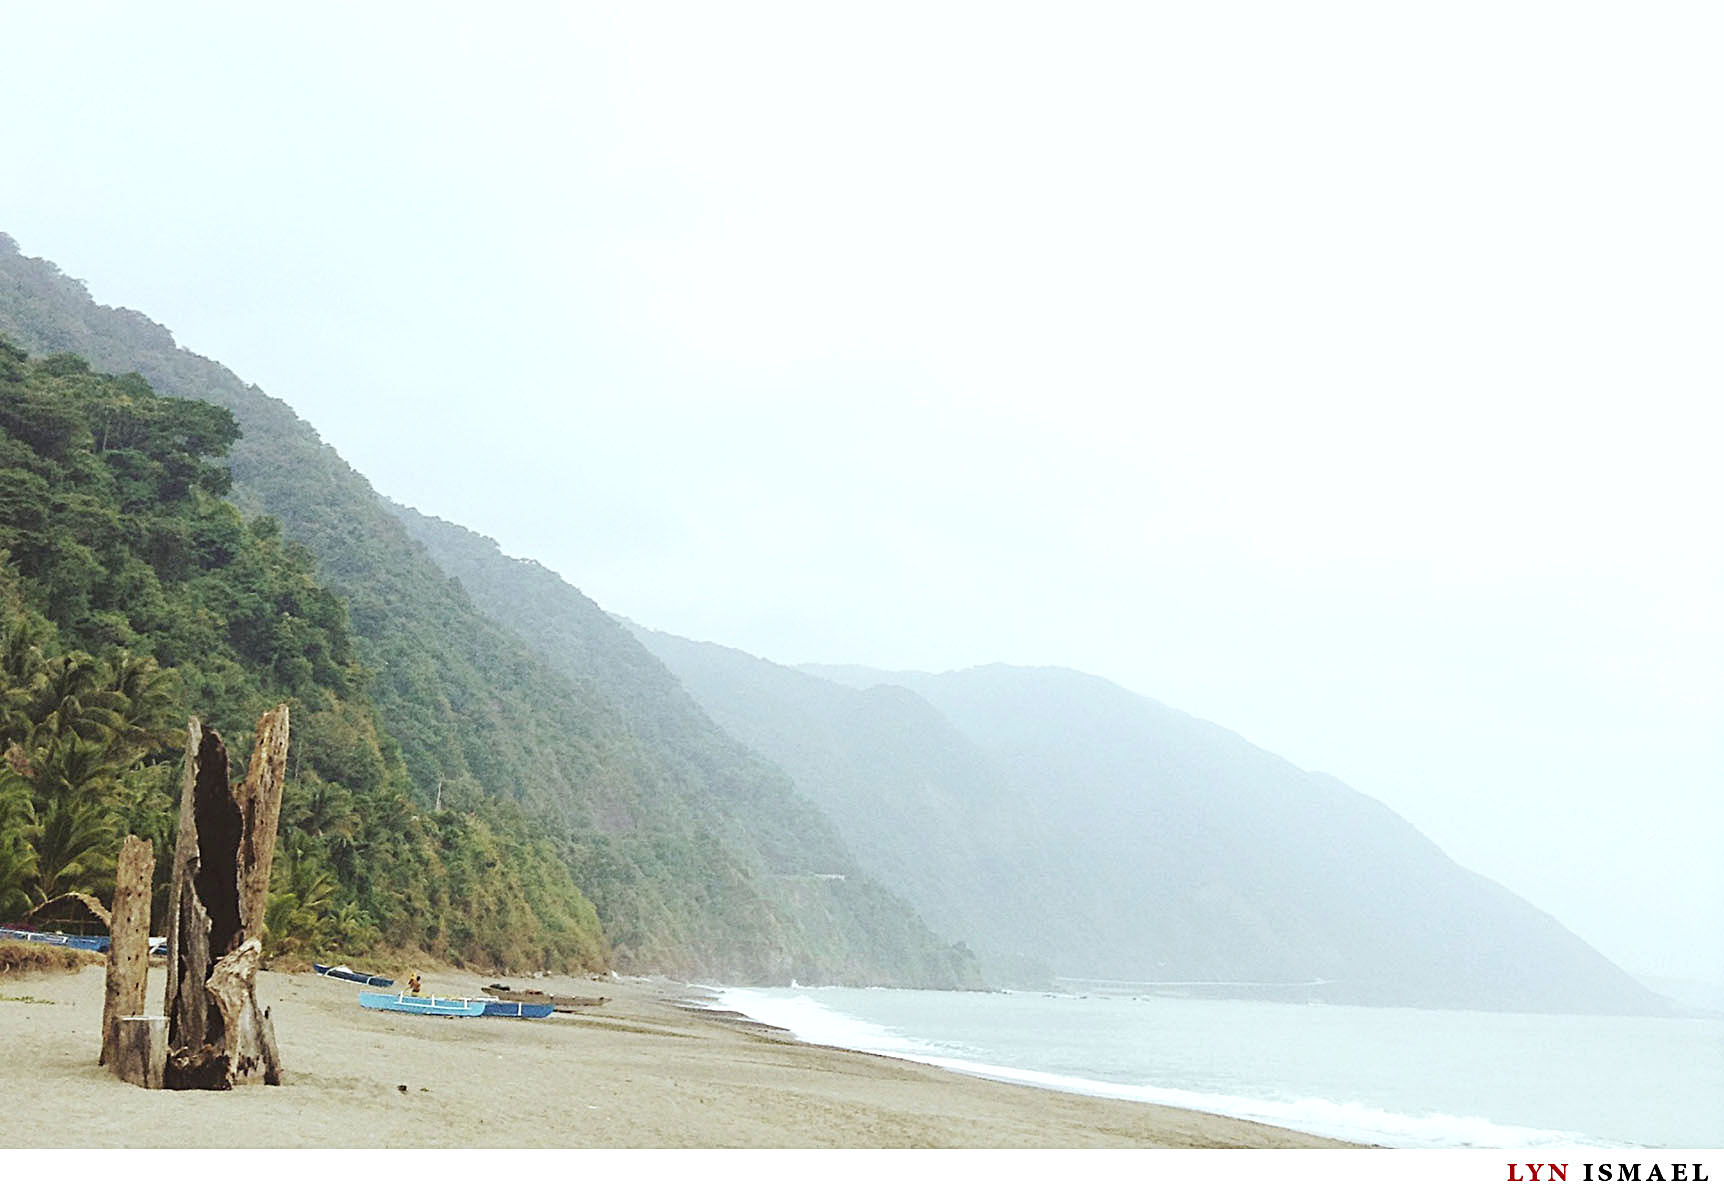 Panzian Beach in Pagudpud, Ilocos Norte